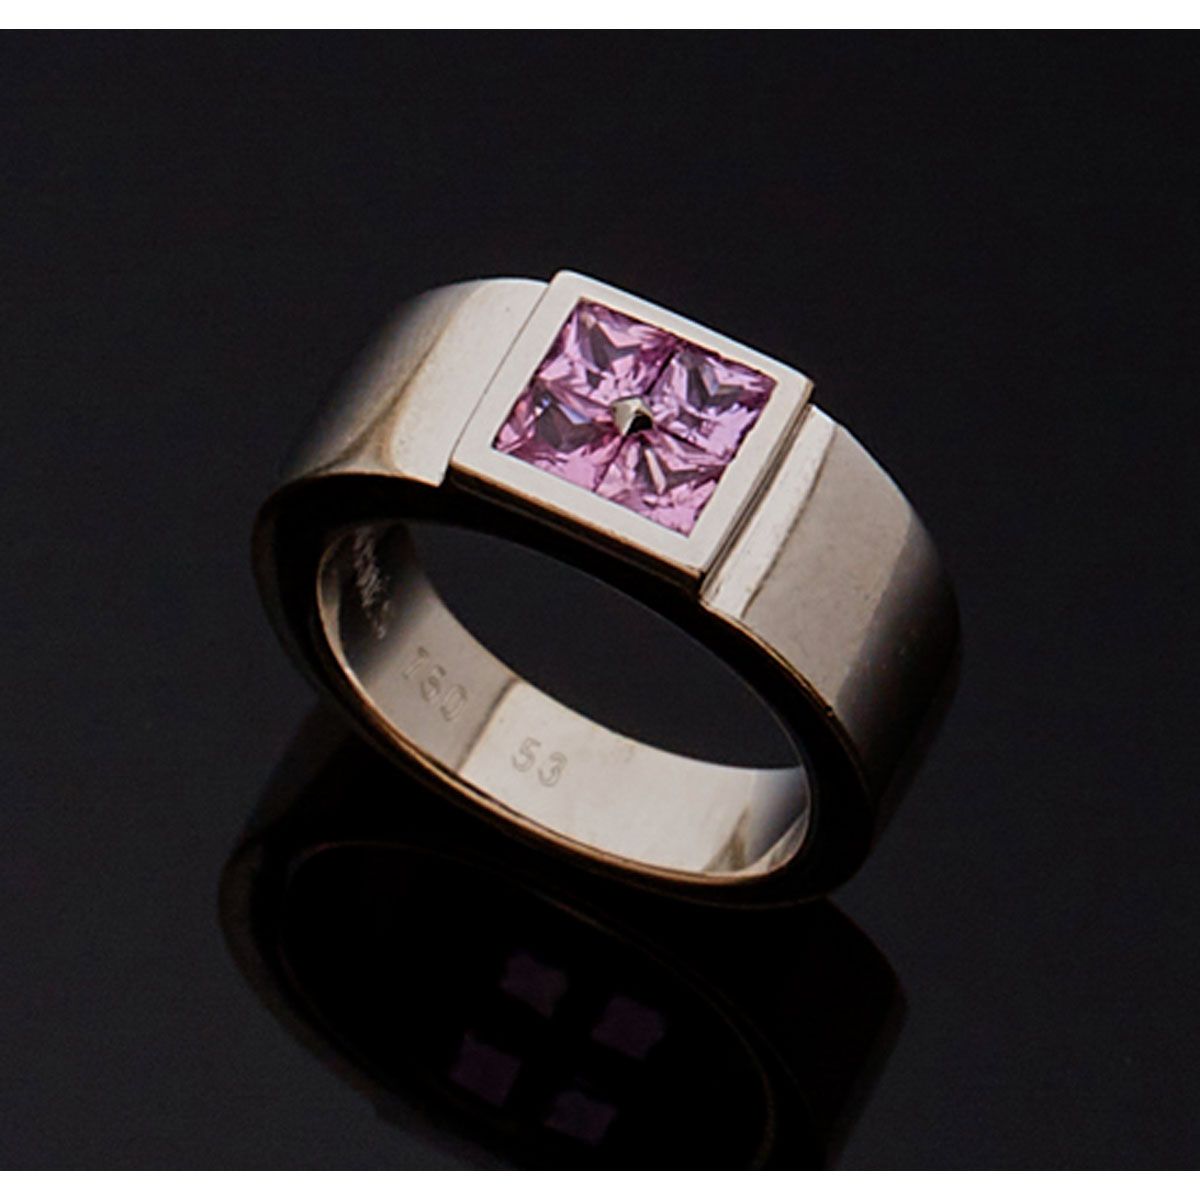 Null 赫米斯。

18K白金戒指，镶有四颗粉色蓝宝石。法国作品，有Hermès签名和编号。

B.P. 14.4g。- TDD 53